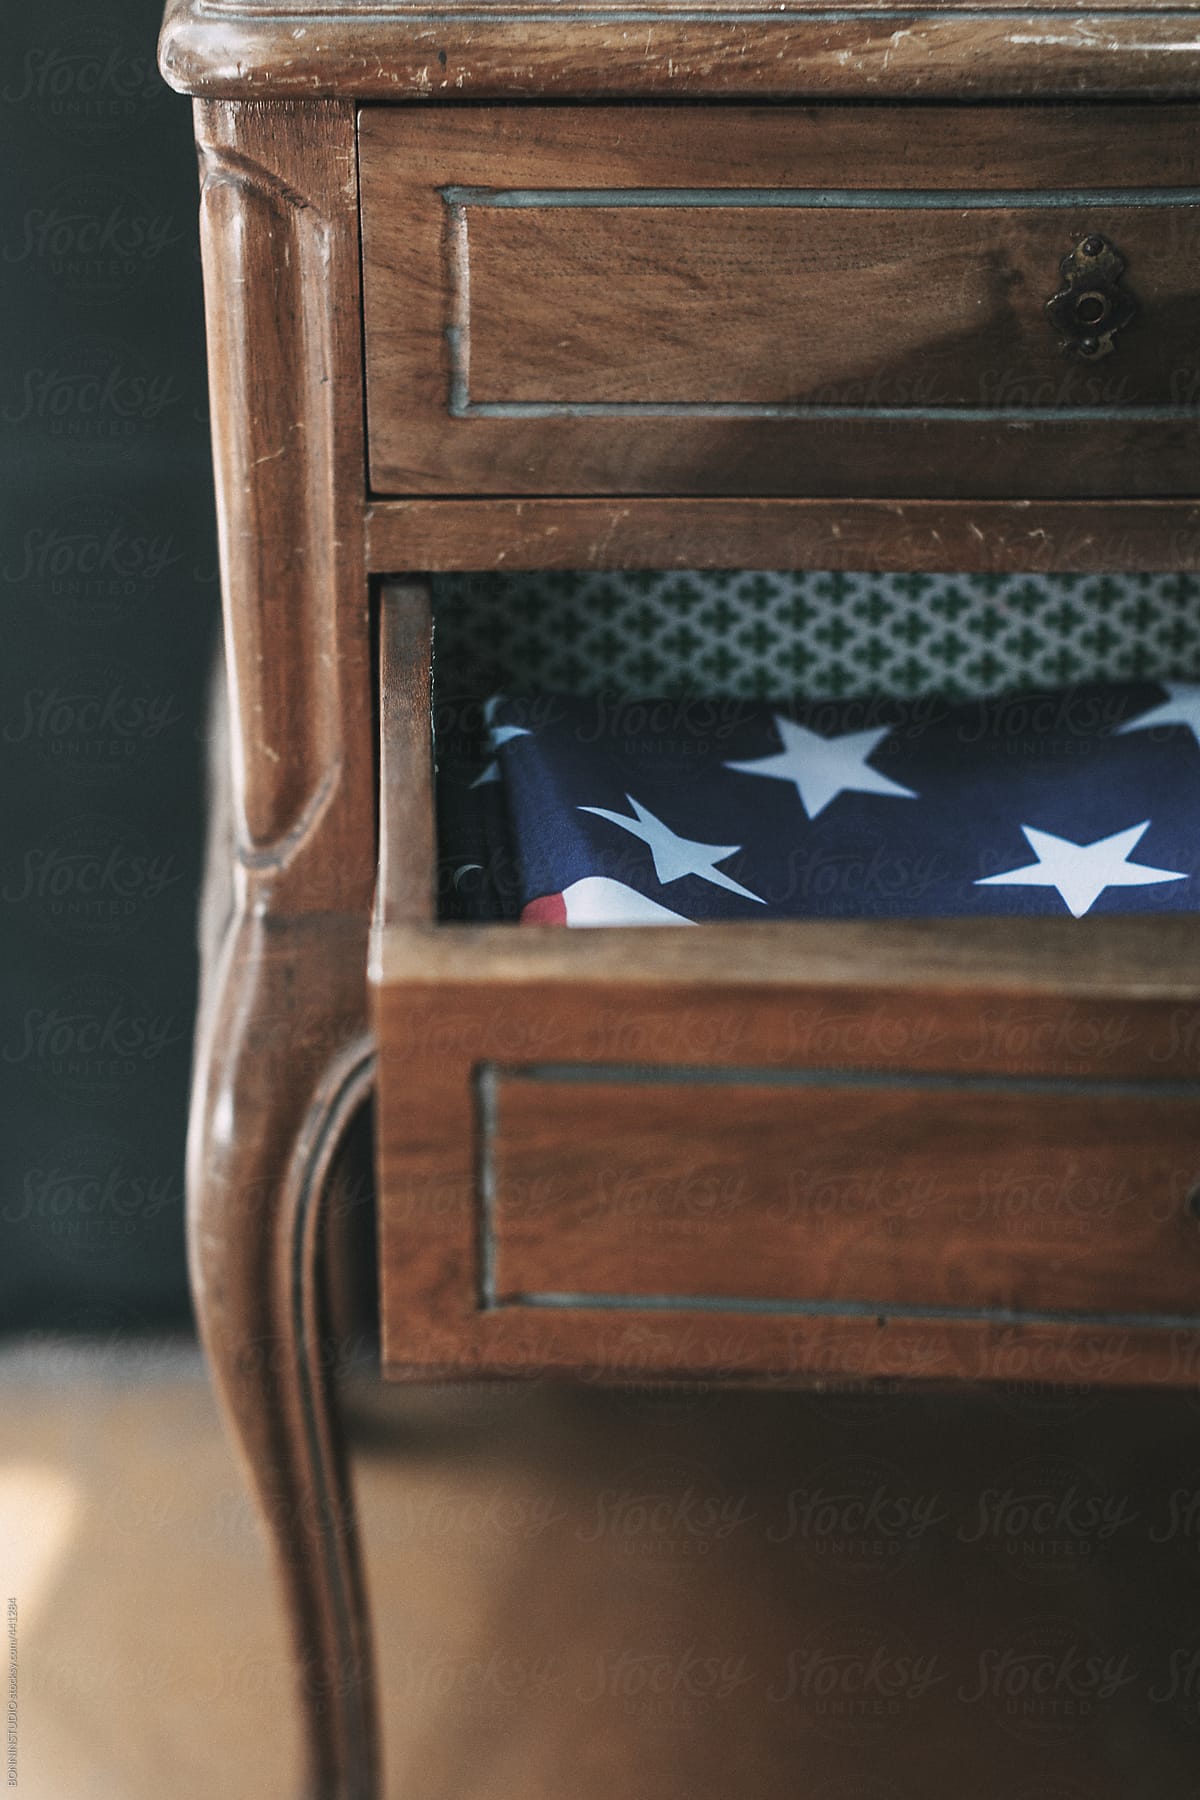 American flag inside drawer on wood side table.